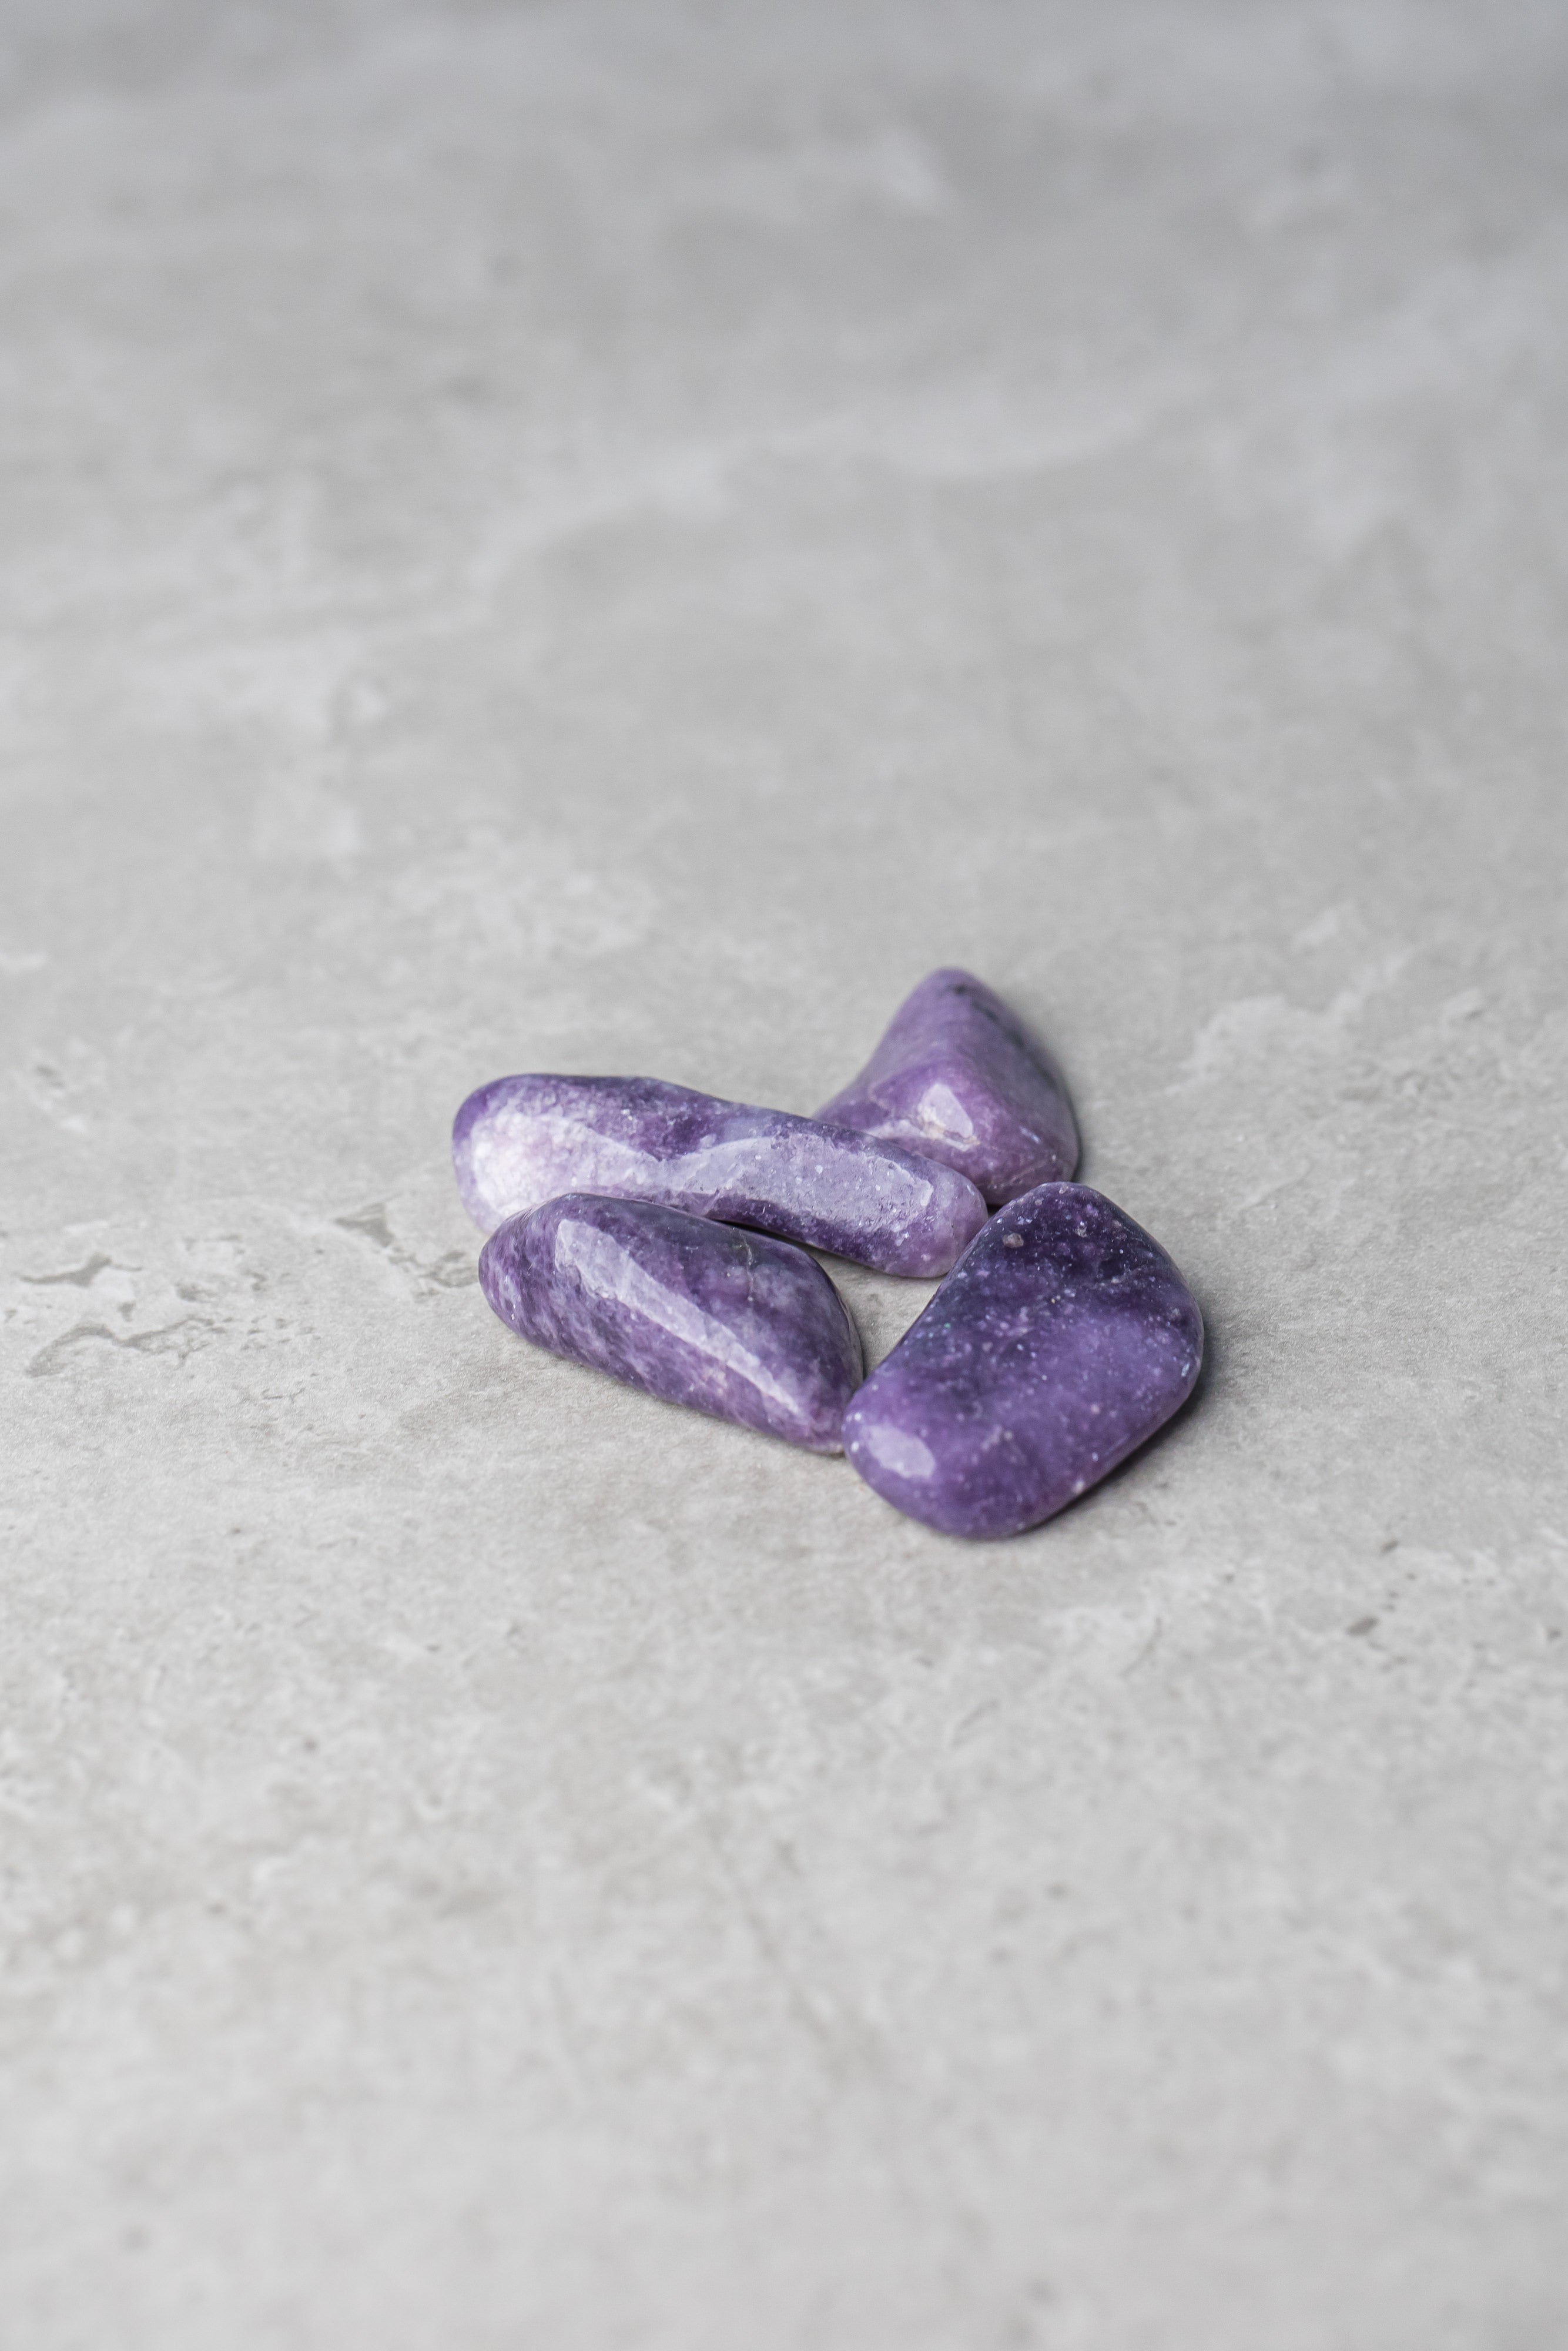 Unicorn Stone - Enchanting Crystal for Inspiration and Creativity - Everyday Rocks